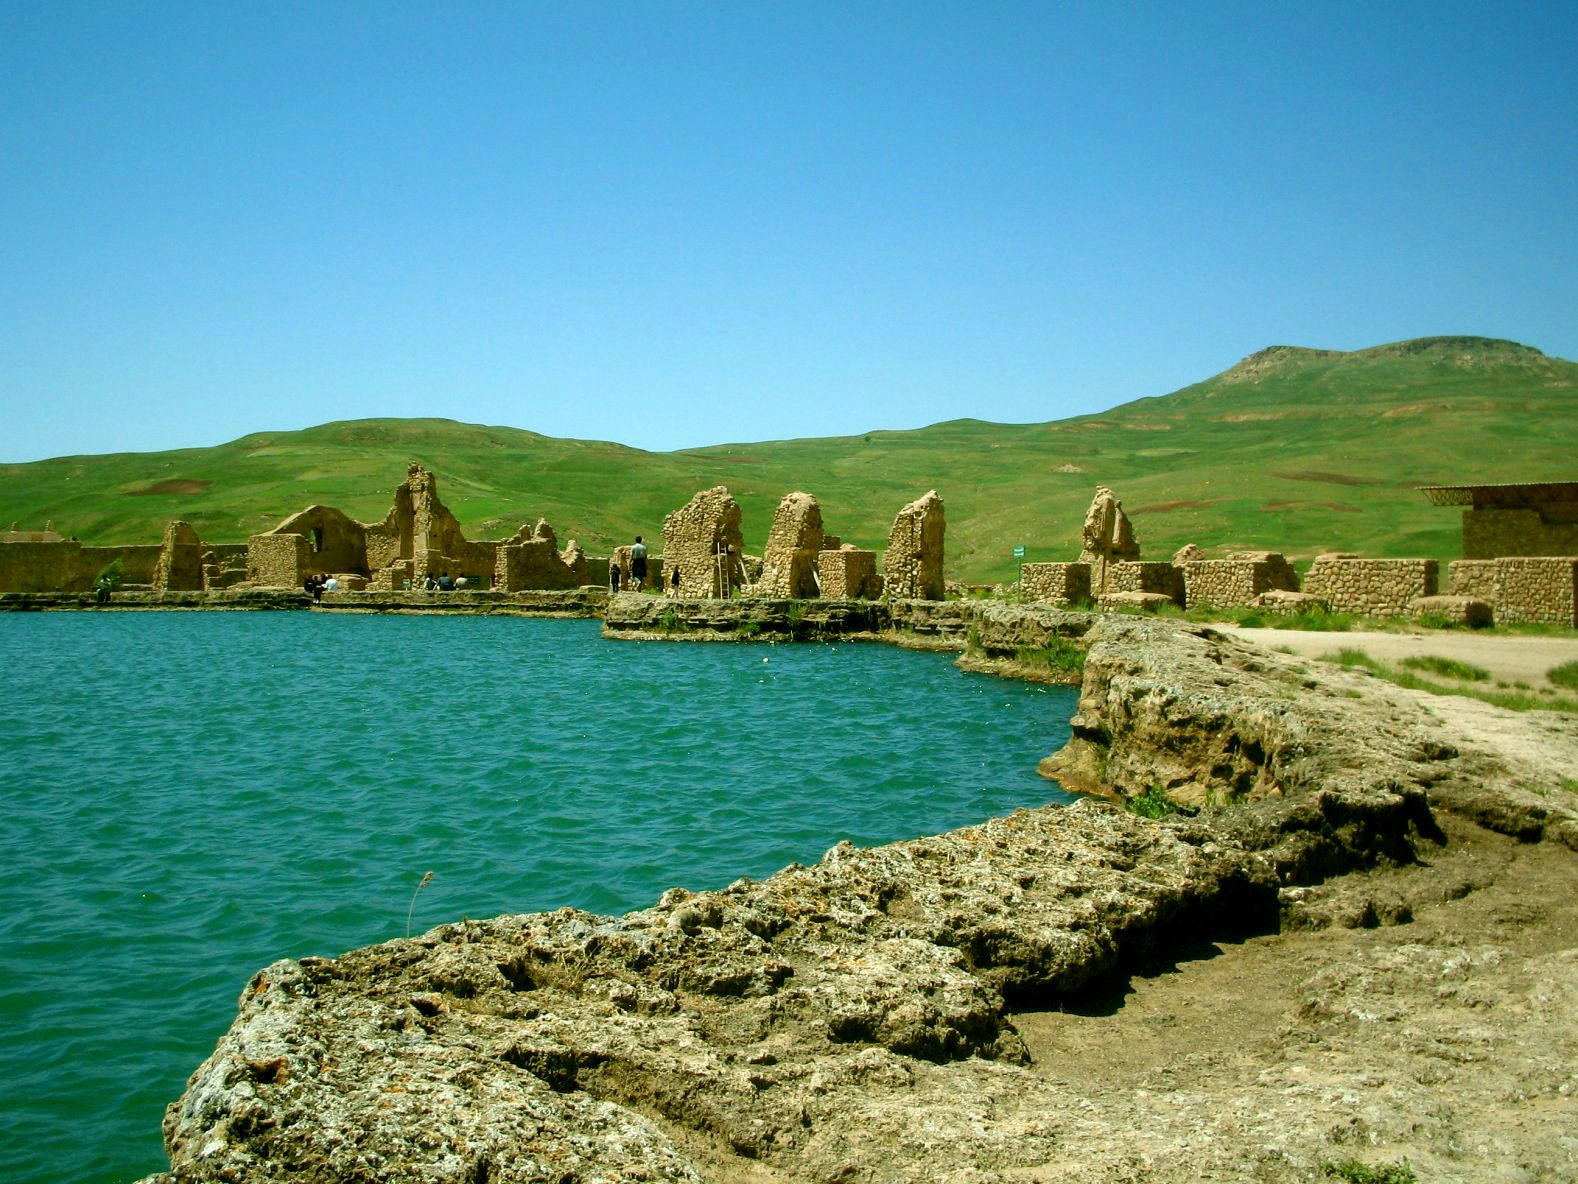 Takht-e Soleyman: The Throne of Solomon in Northwest Iran